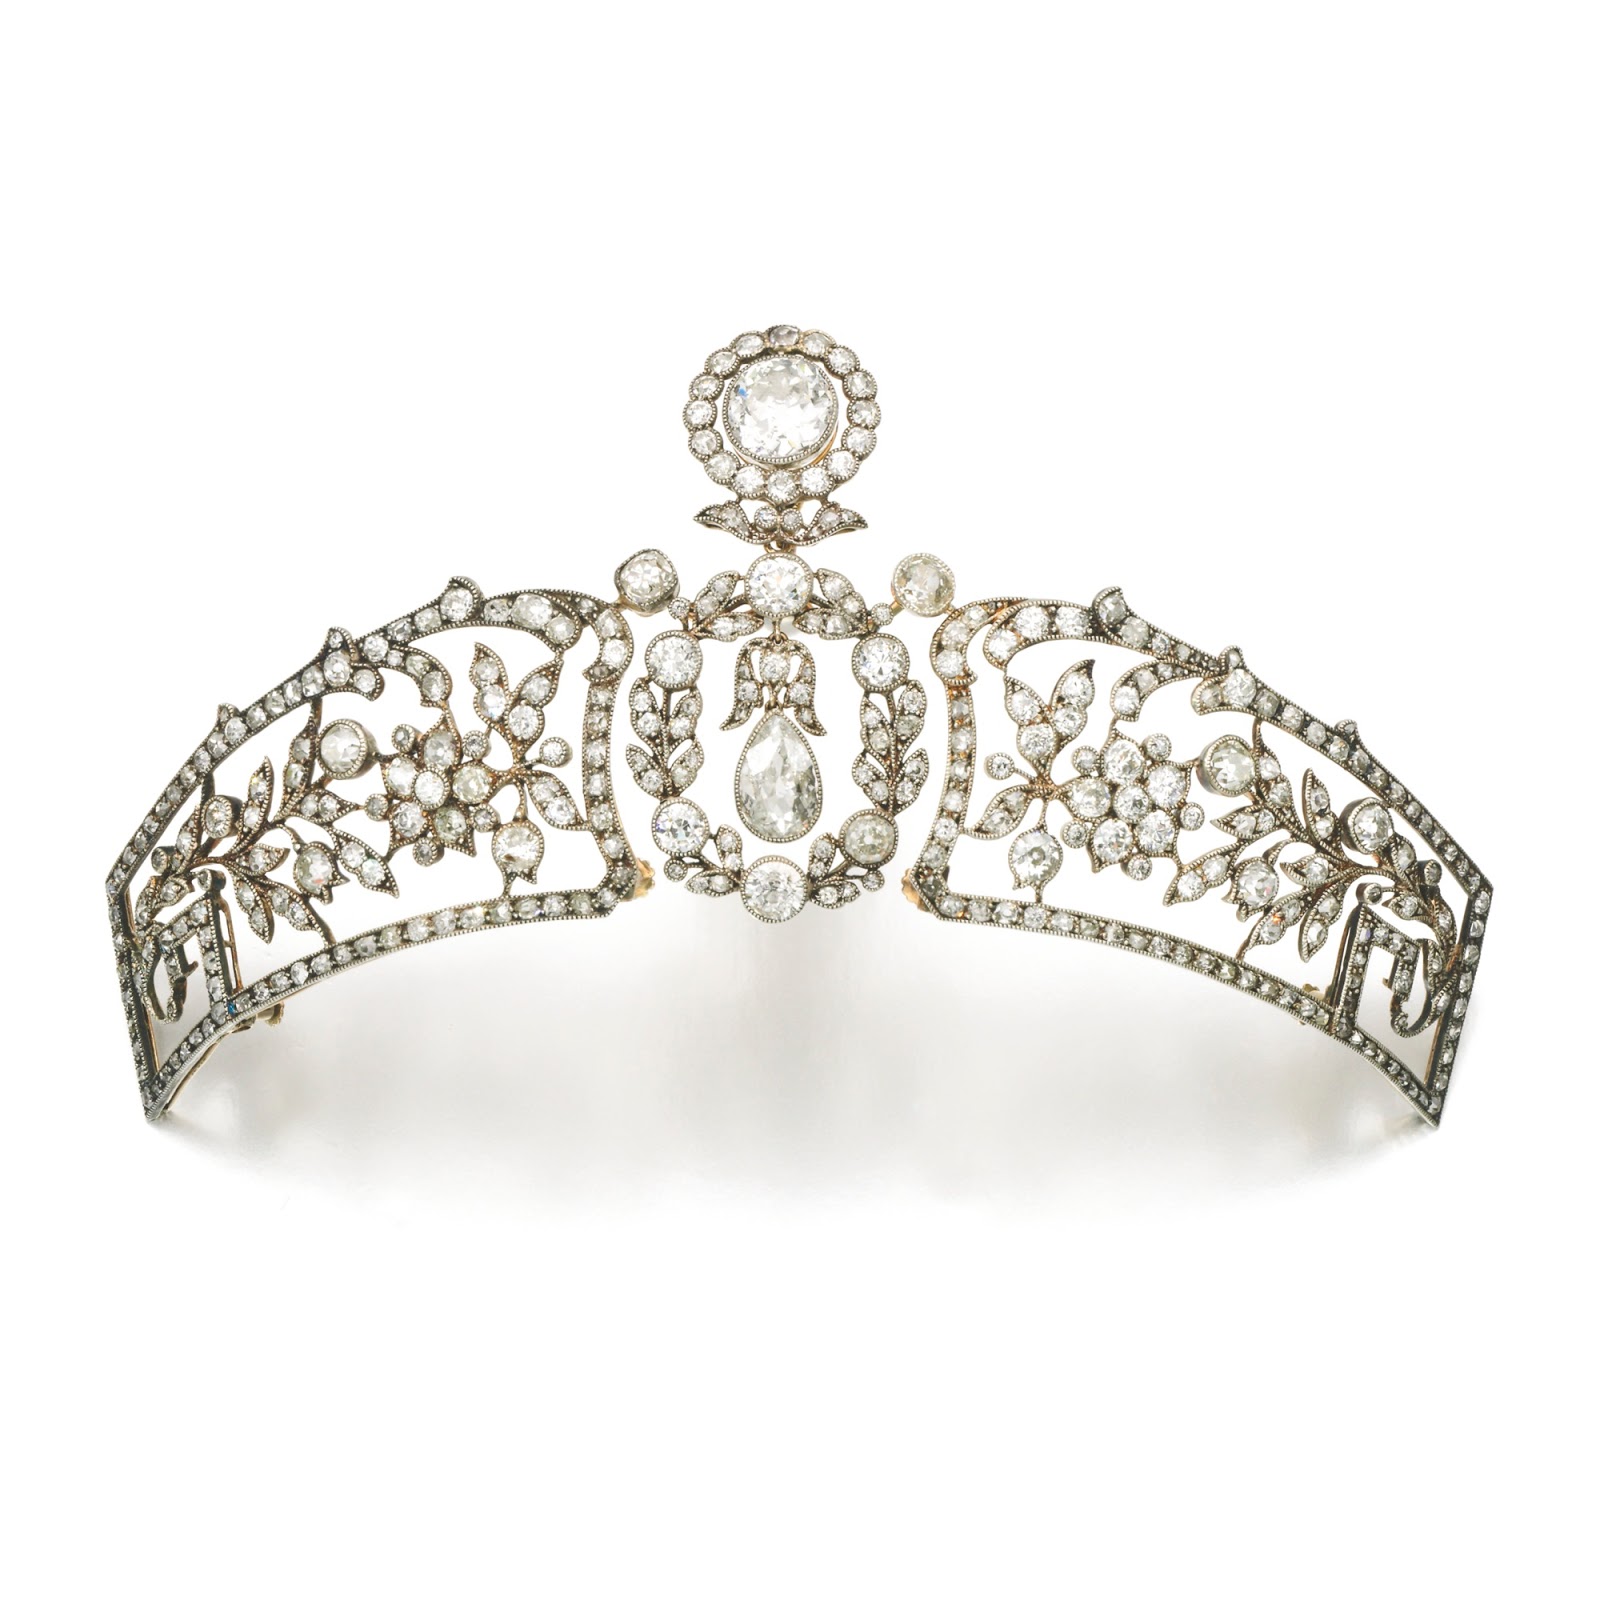 Marie Poutine's Jewels & Royals: Diamond Diadems